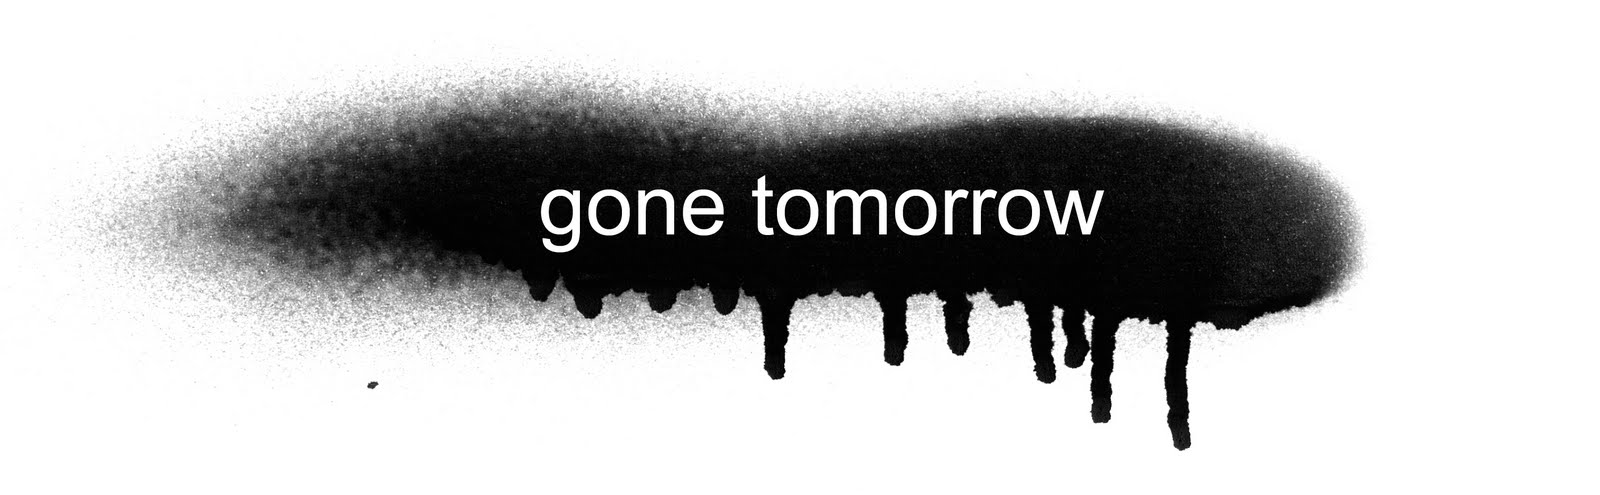 gone tomorrow